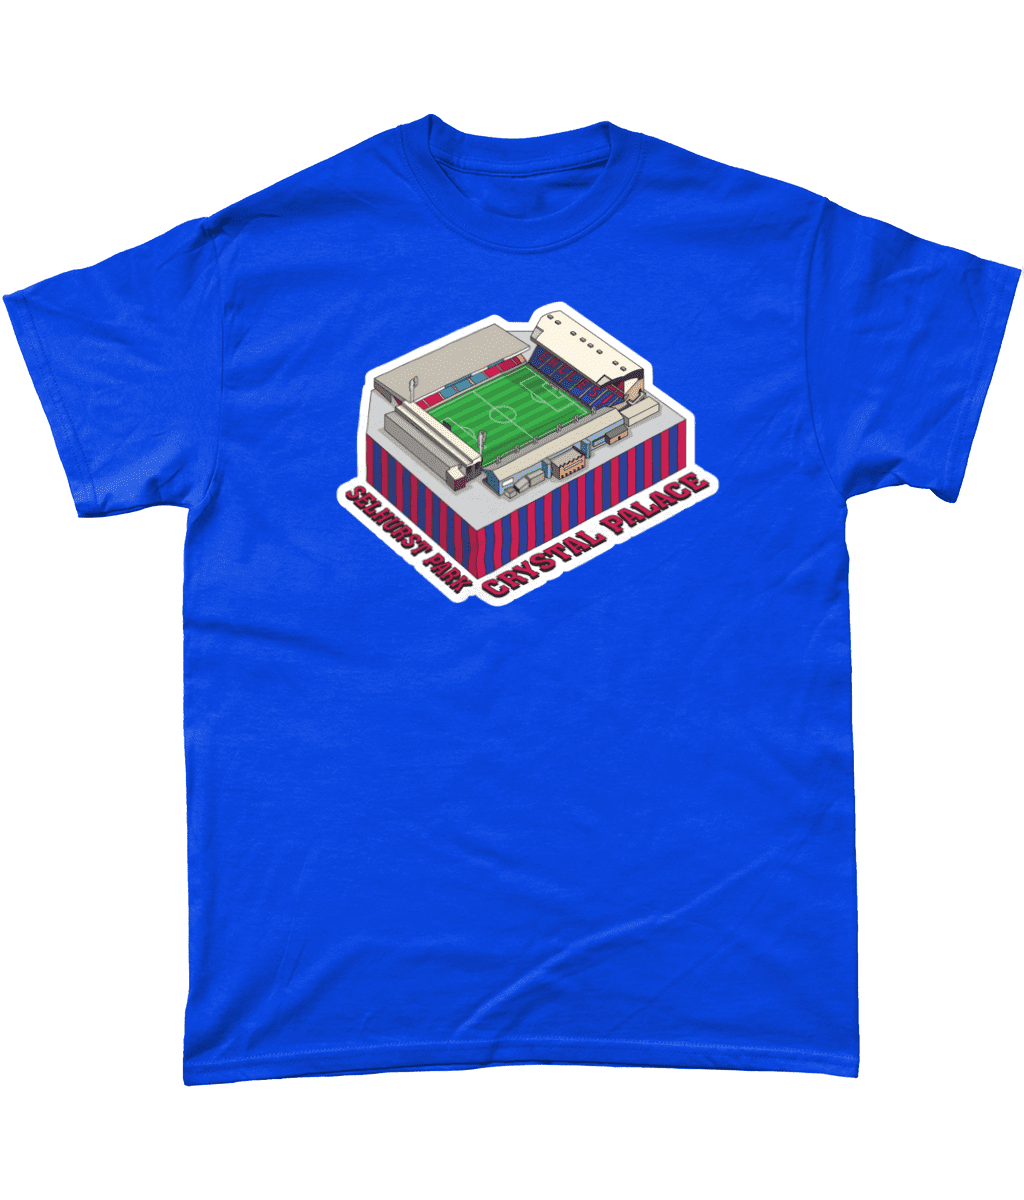 Crystal Palace Selhurst Park Football Stadium Illustration T Shirt Royal Blue